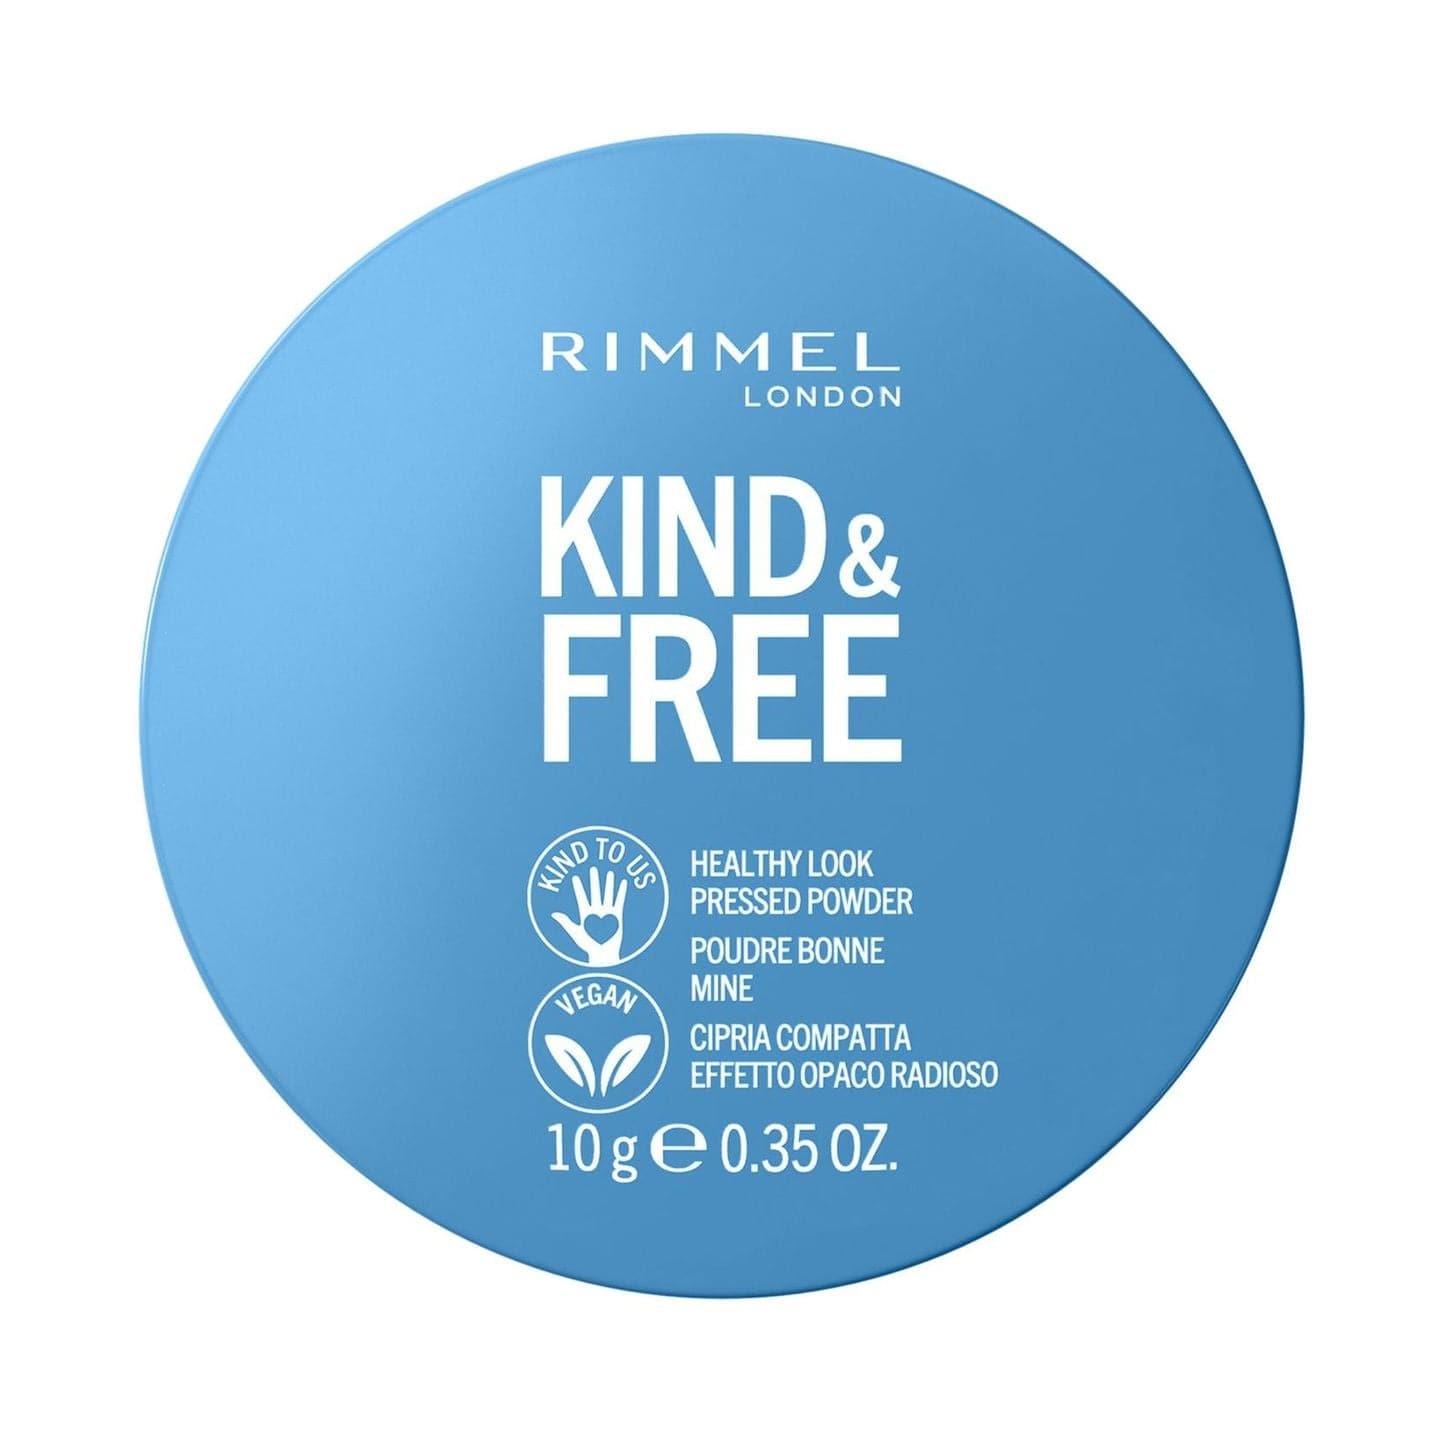 Rimmel London Kind & Free Powder - 010 Fair - Premium Health & Beauty from Rimmel London - Just Rs 2140! Shop now at Cozmetica